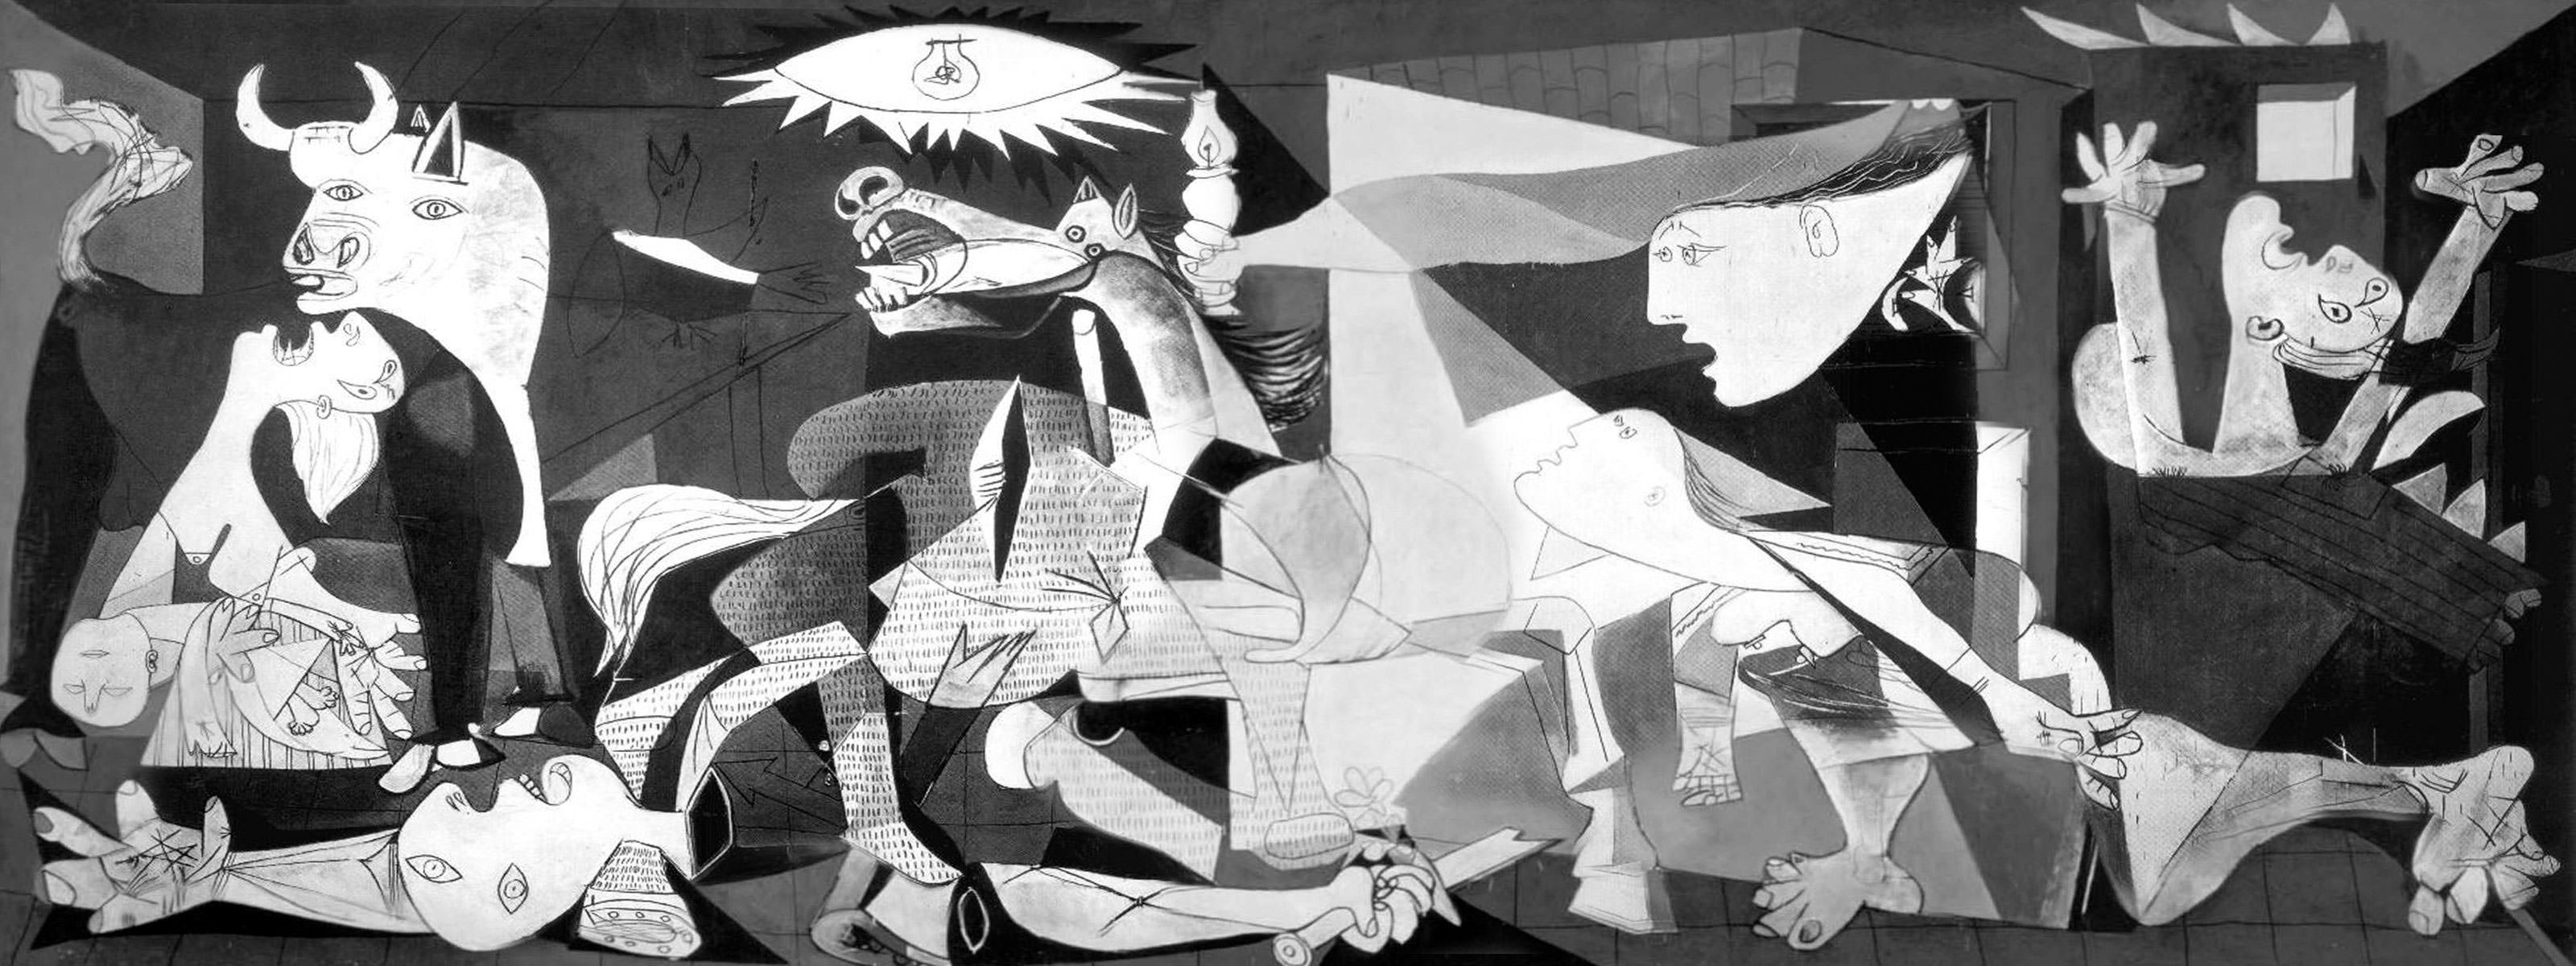 Picasso Pablo - Guernica